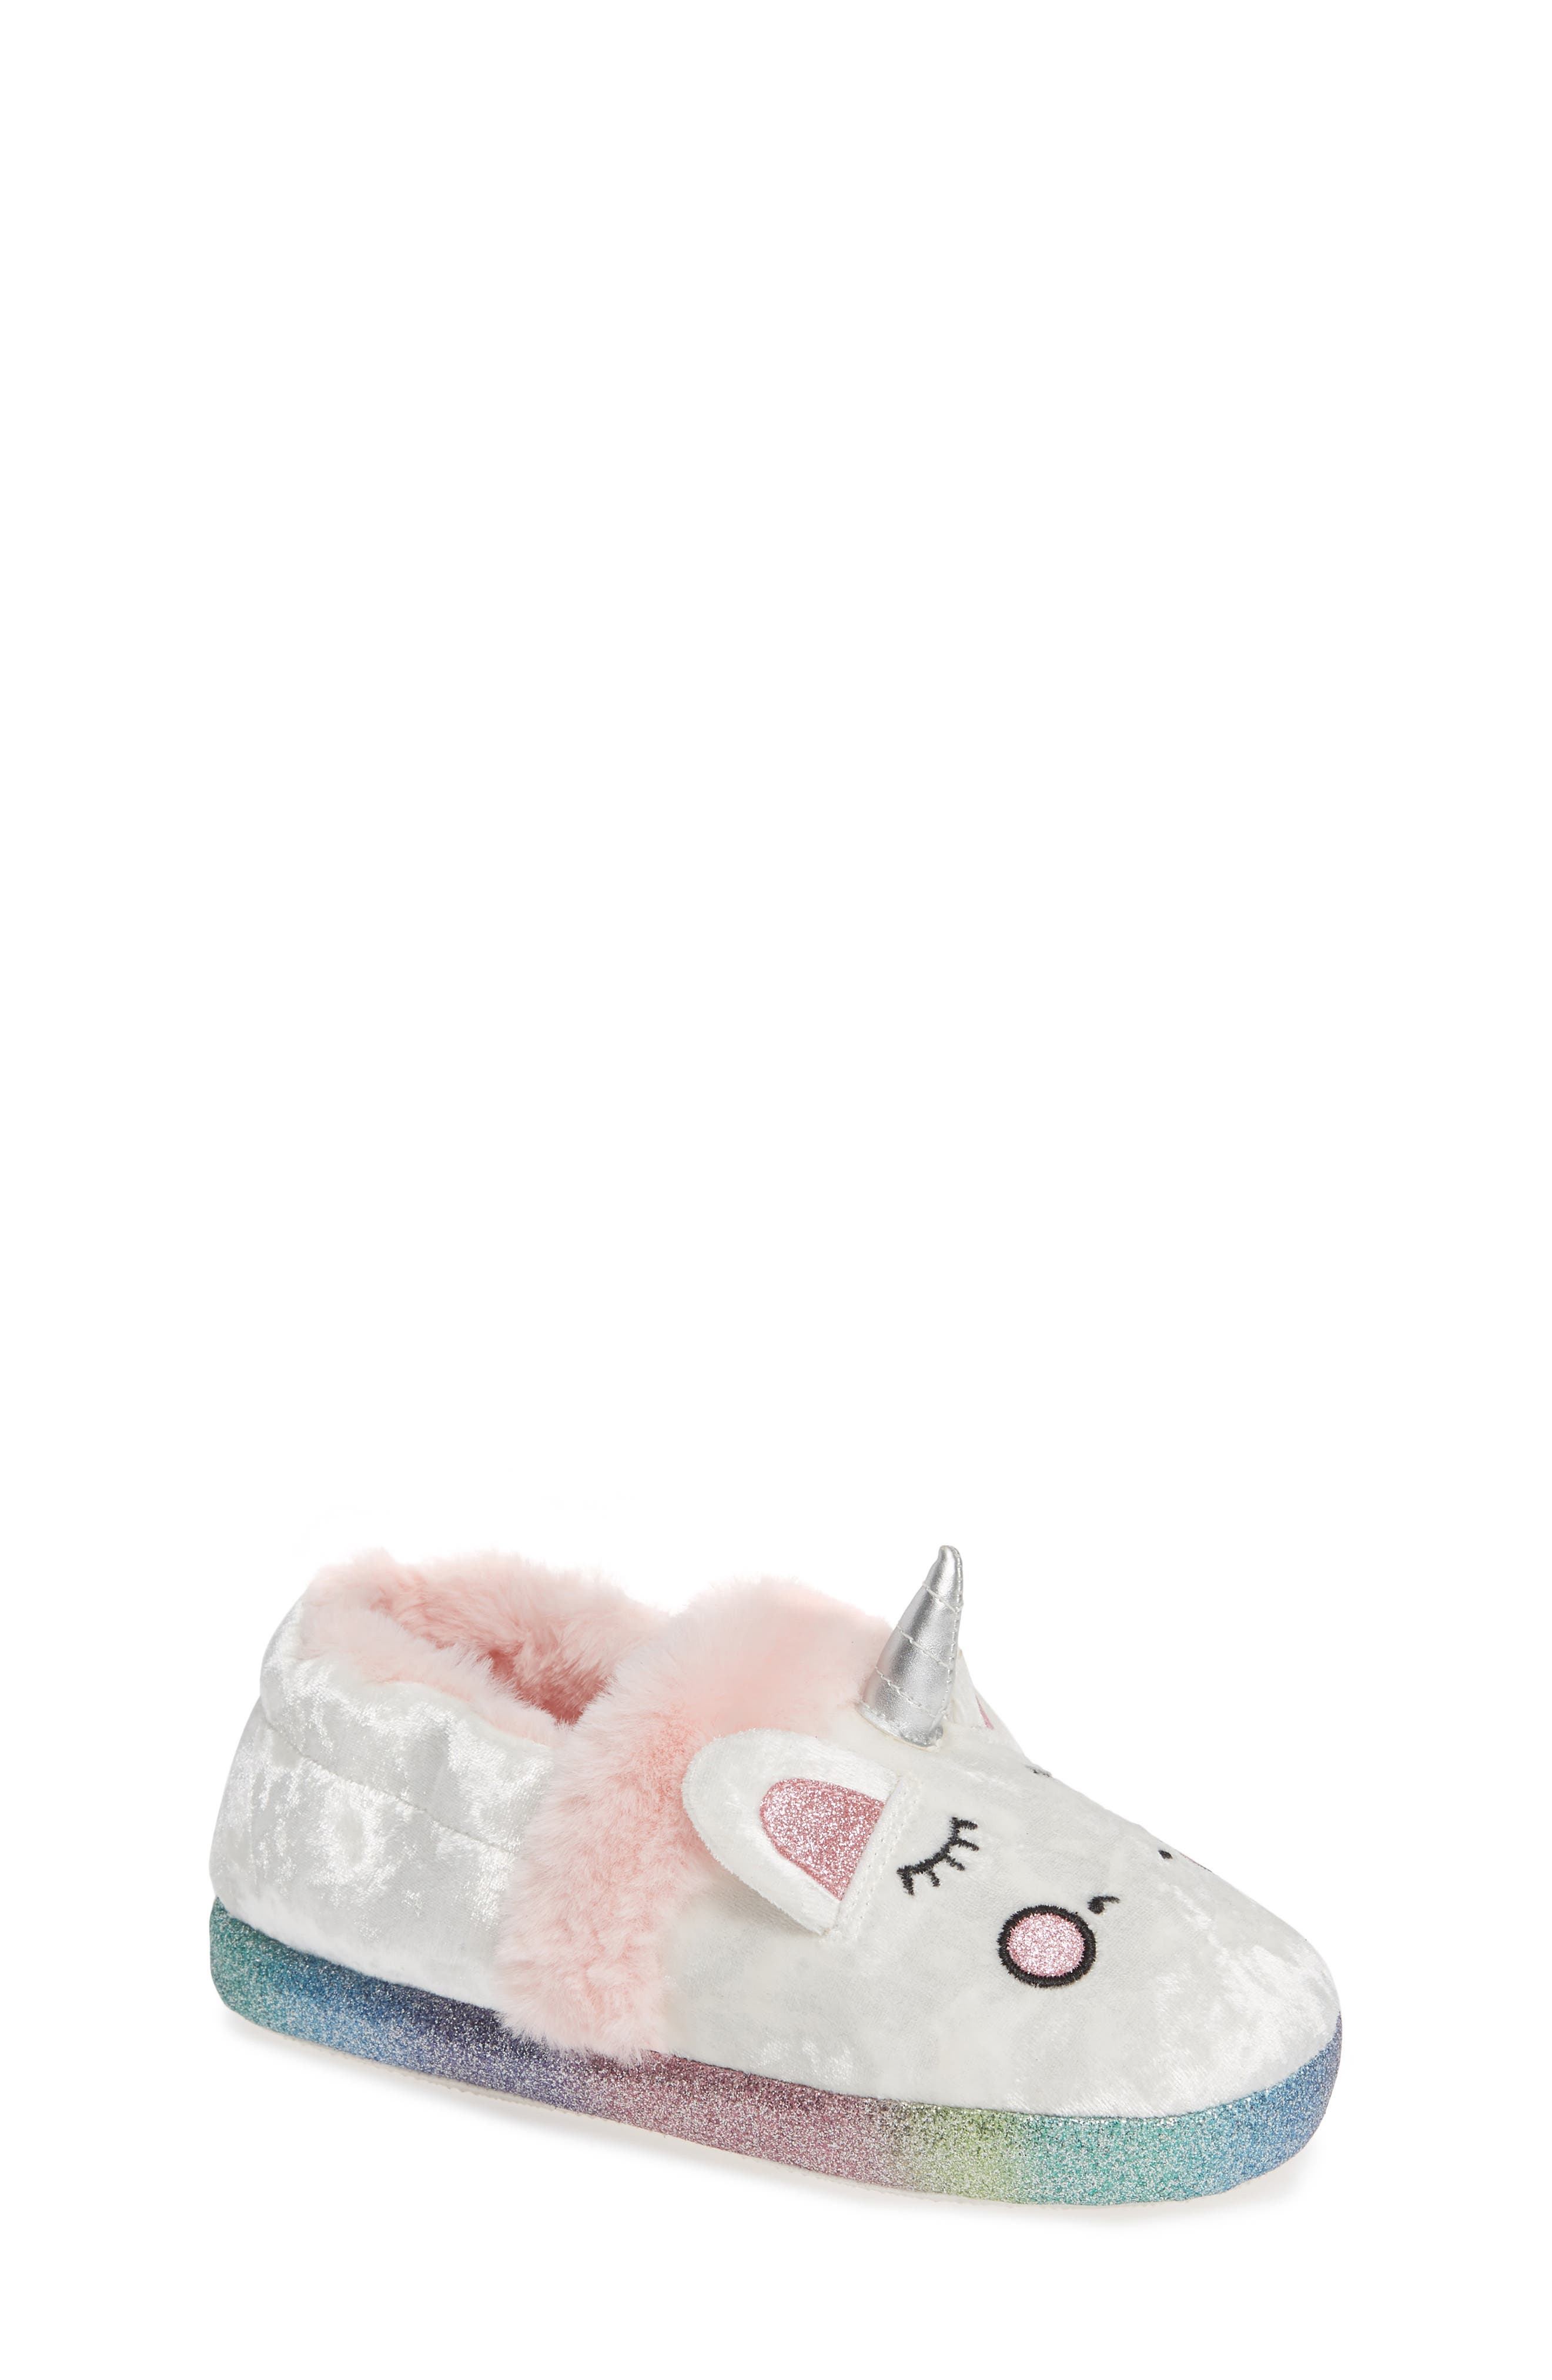 nordstrom unicorn slippers